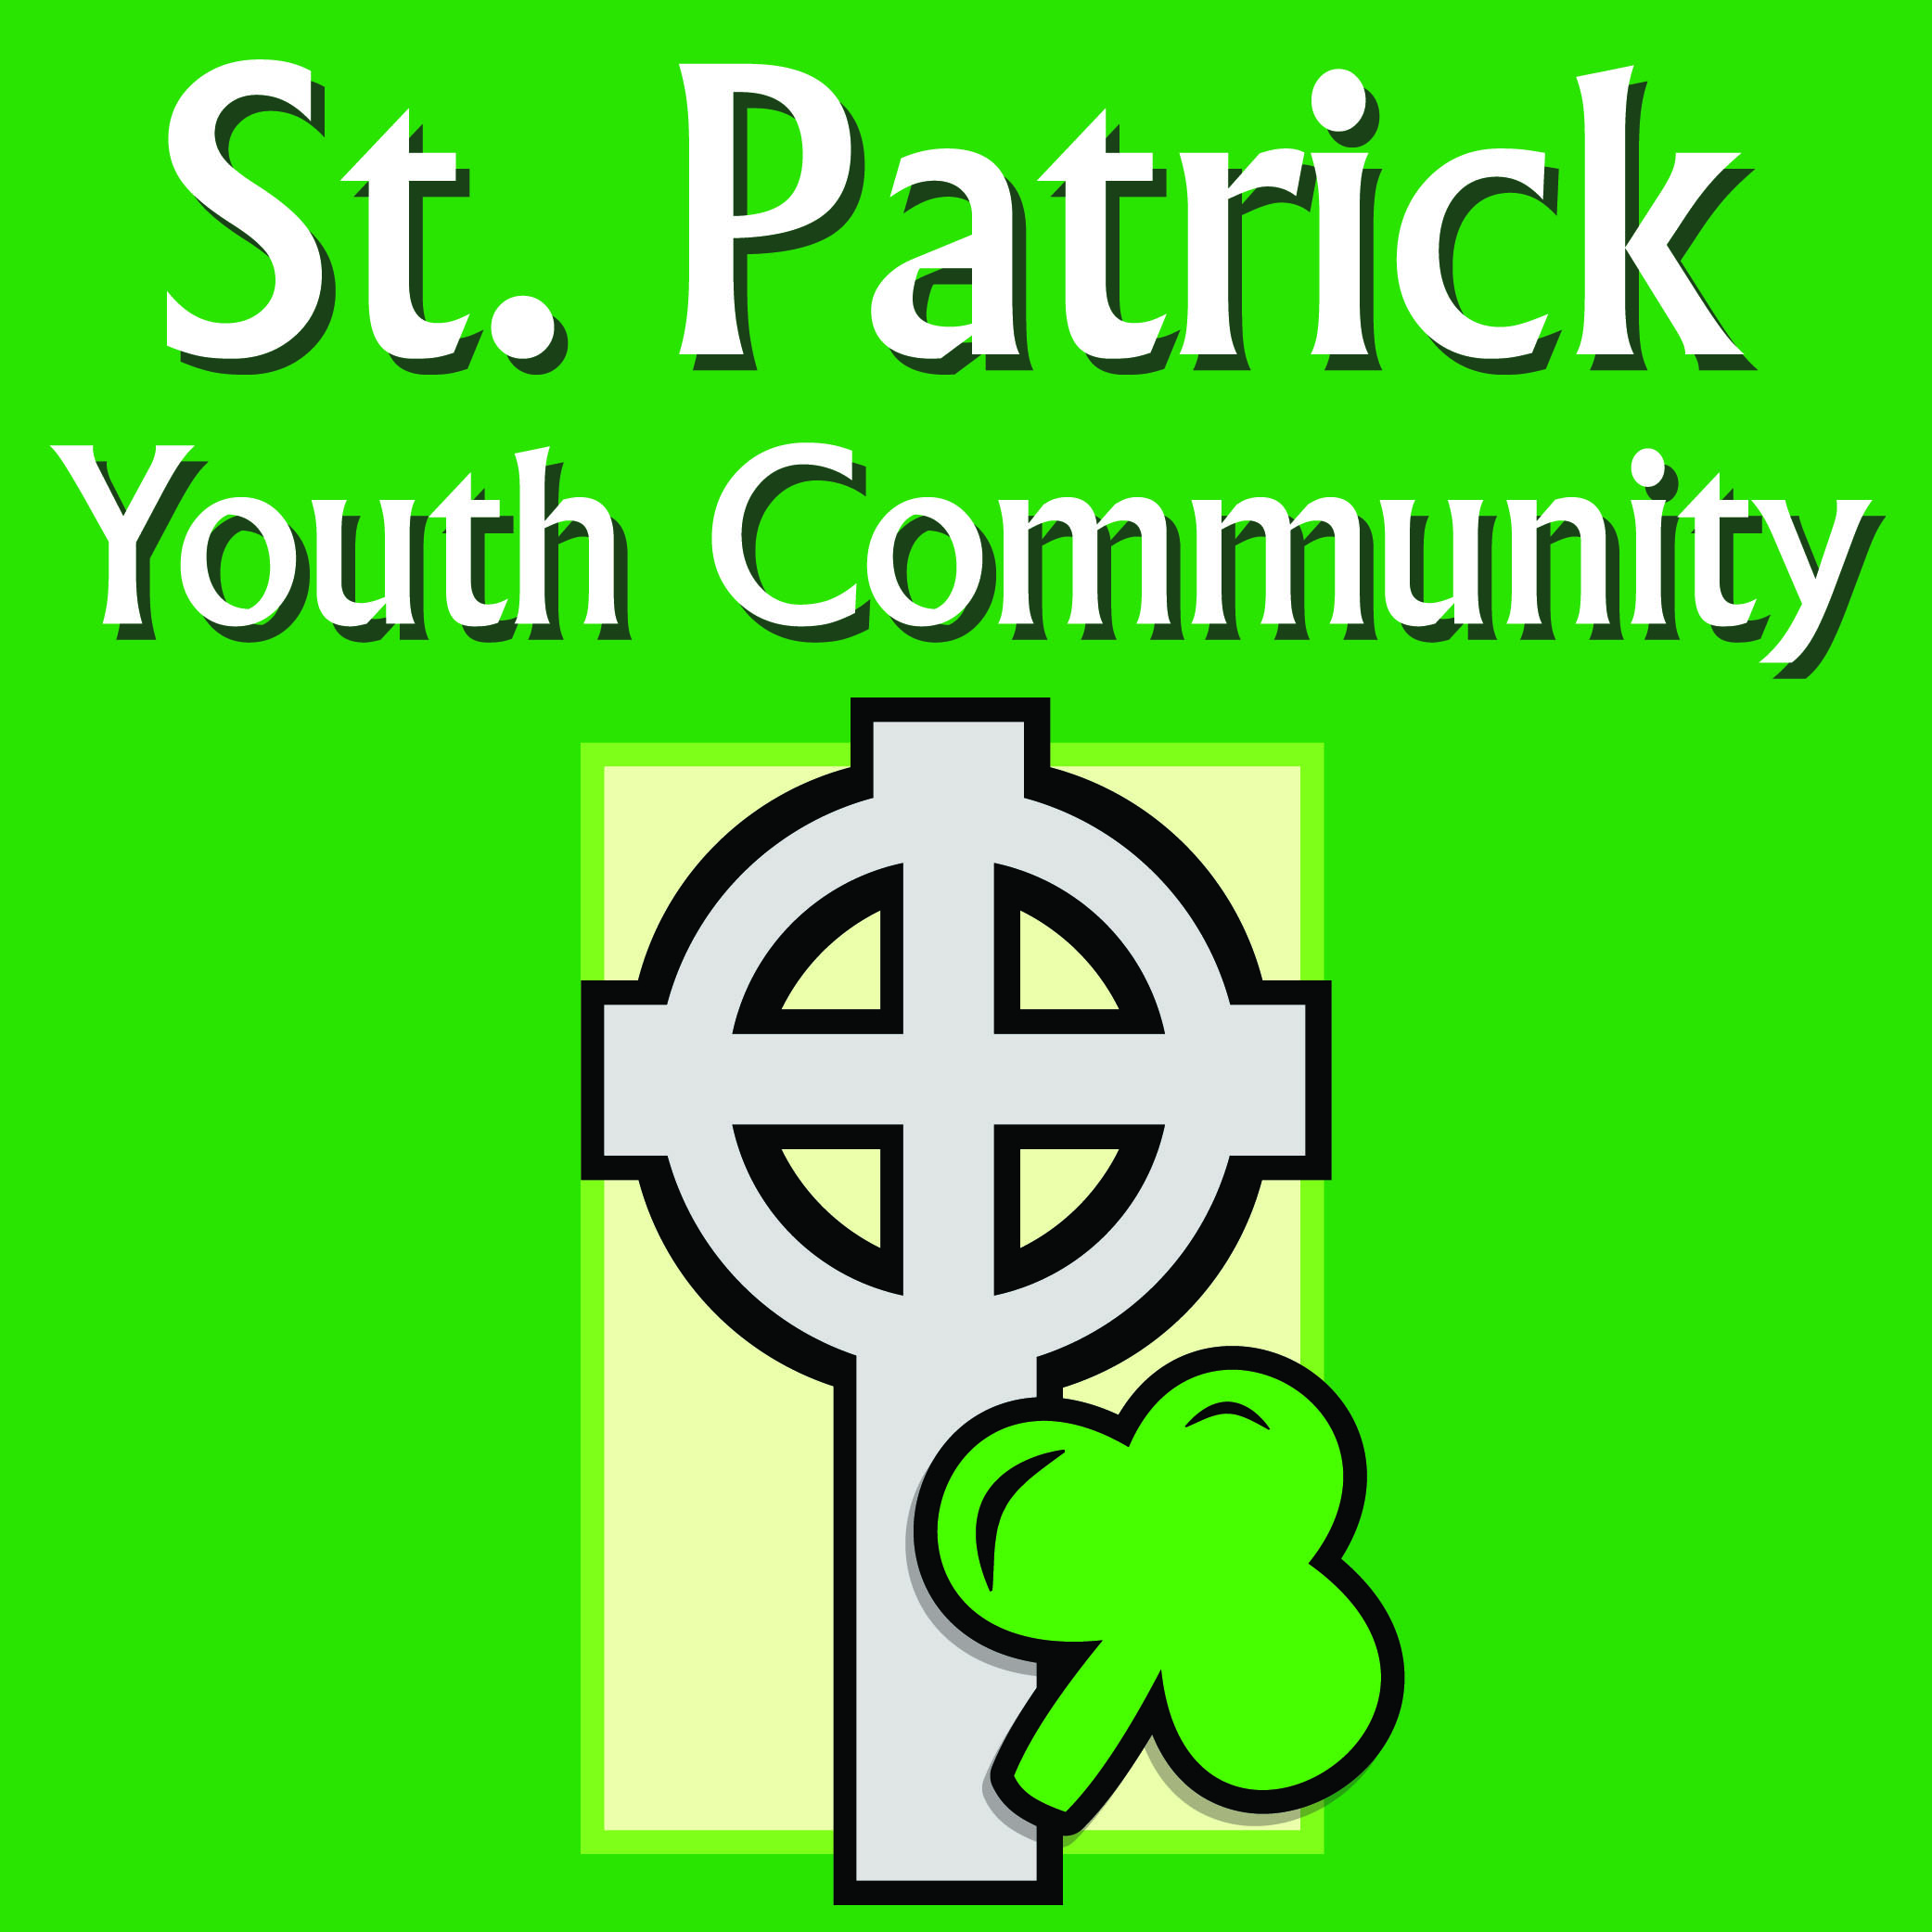 St. Patrick Youth Community 